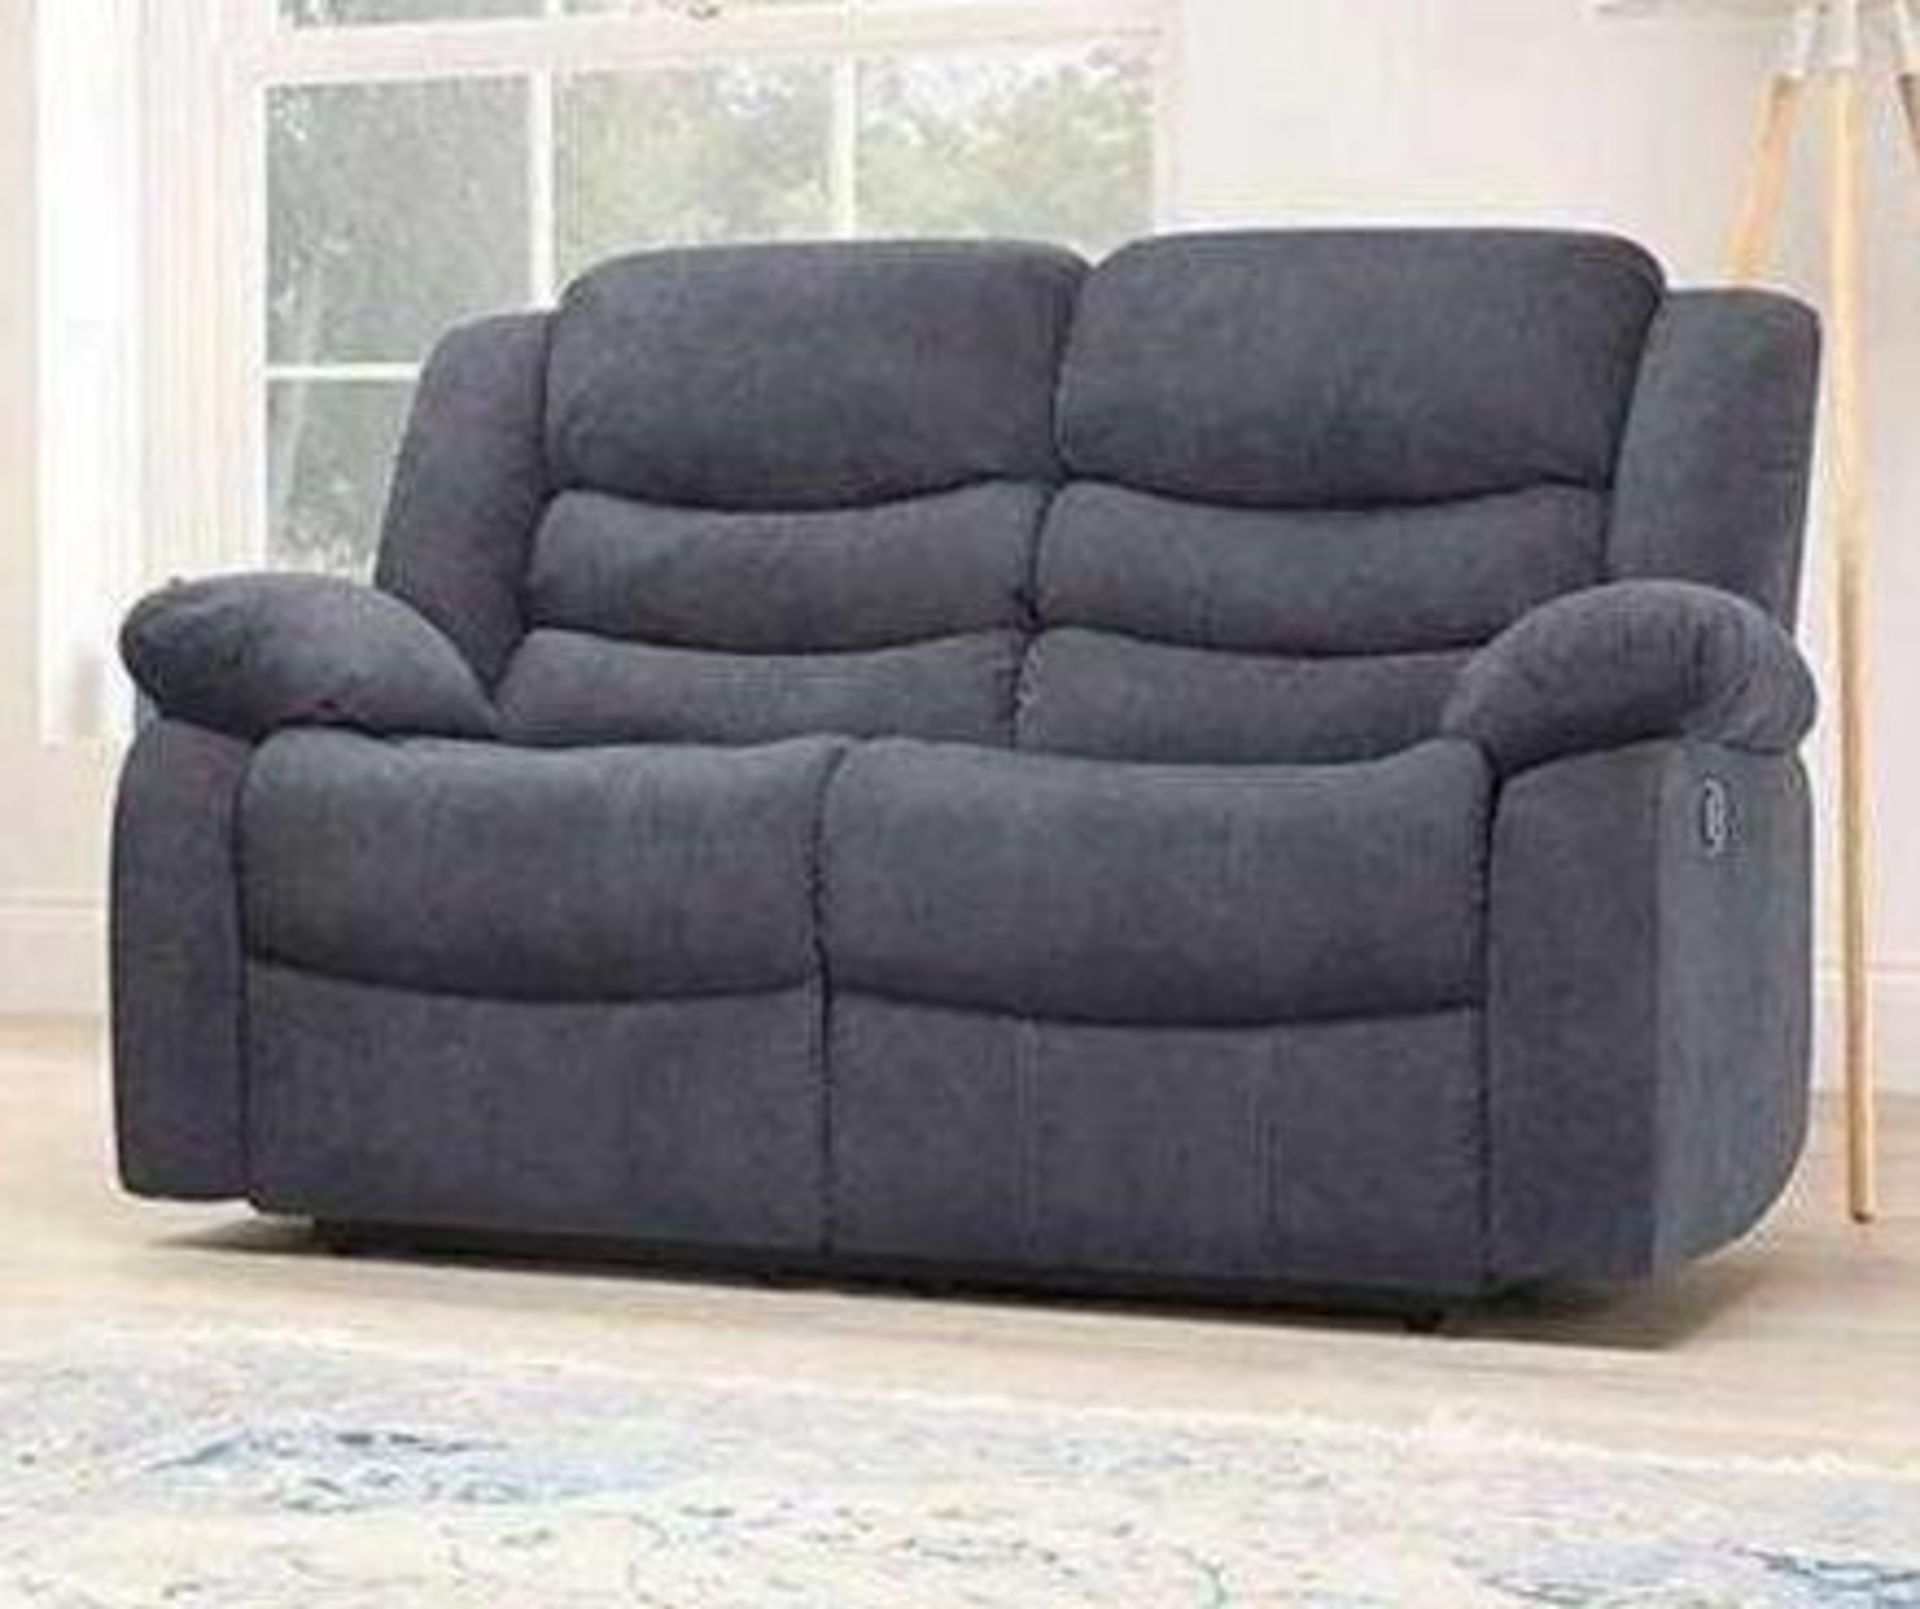 BRAND NEW & BOXED Malaga 3 + 2 seater manual reclining sofa in elephant Grey. - Image 3 of 3